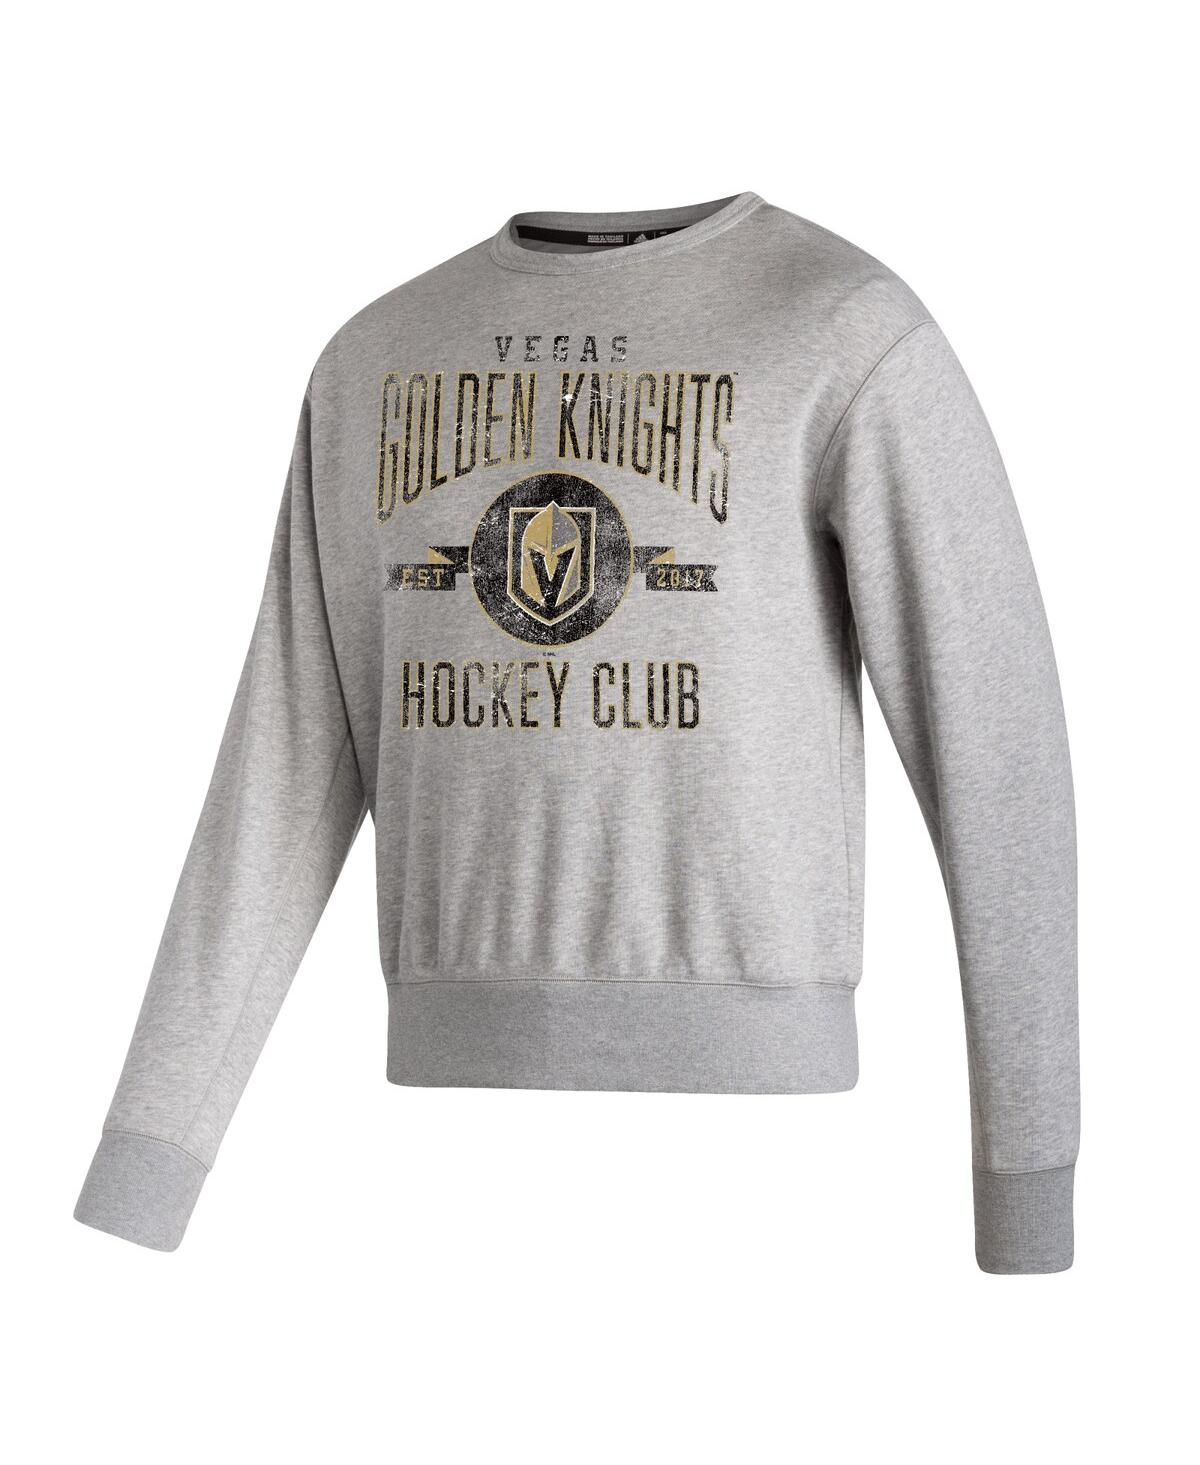 Shop Adidas Originals Men's Adidas Heathered Gray Vegas Golden Knights Vintage-like Pullover Sweatshirt